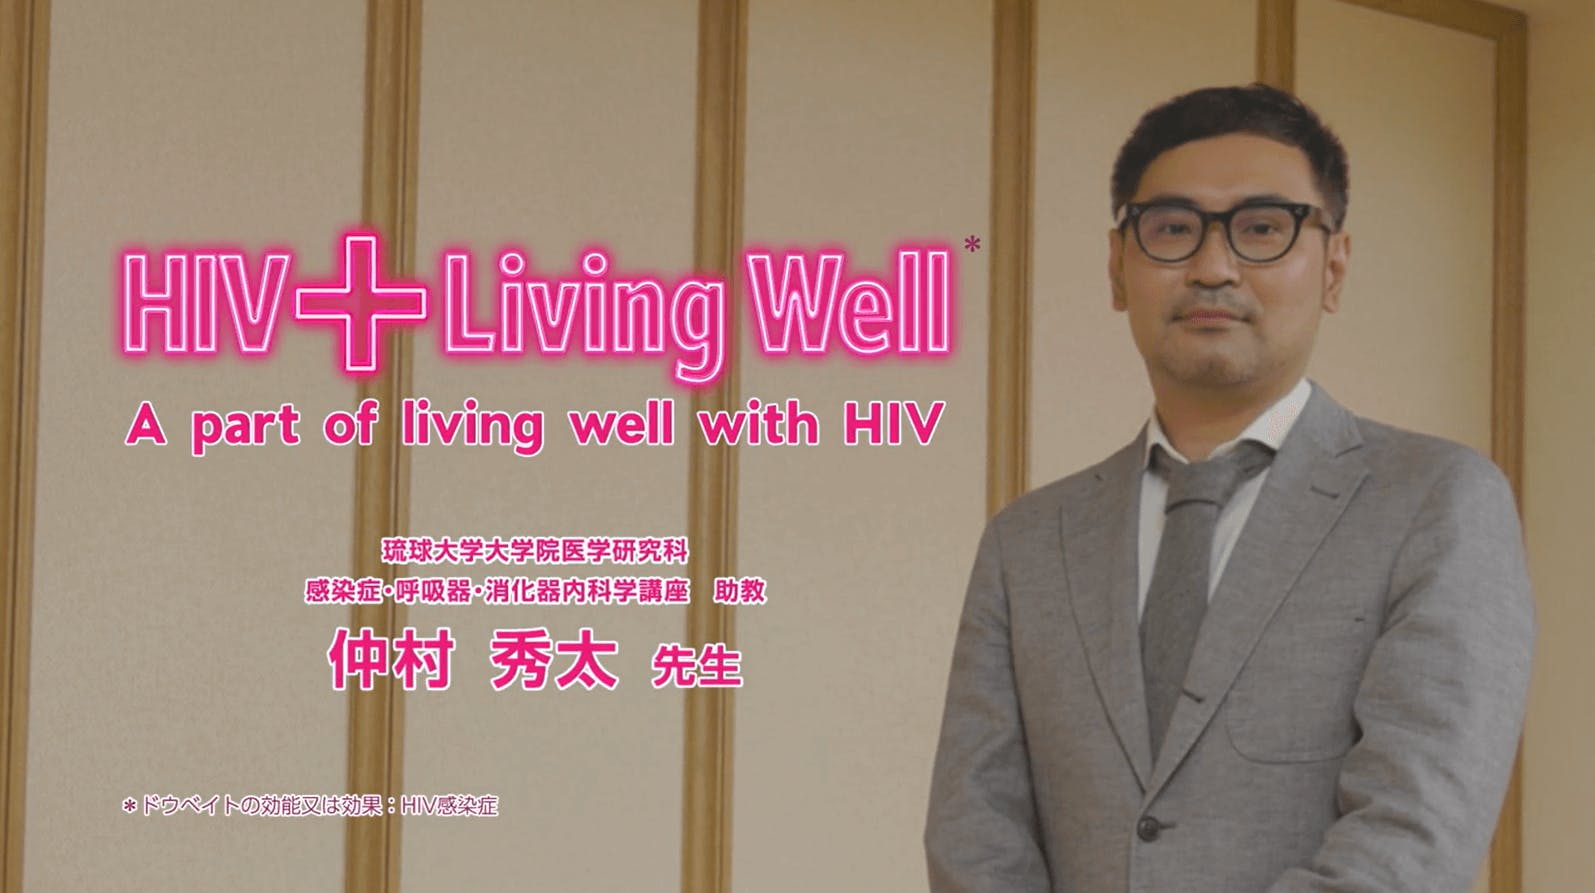 「HIV治療における多剤併用とHIV陽性者の認識」について、琉球大学大学院医学研究科　仲村秀太先生にご解説いただきます。